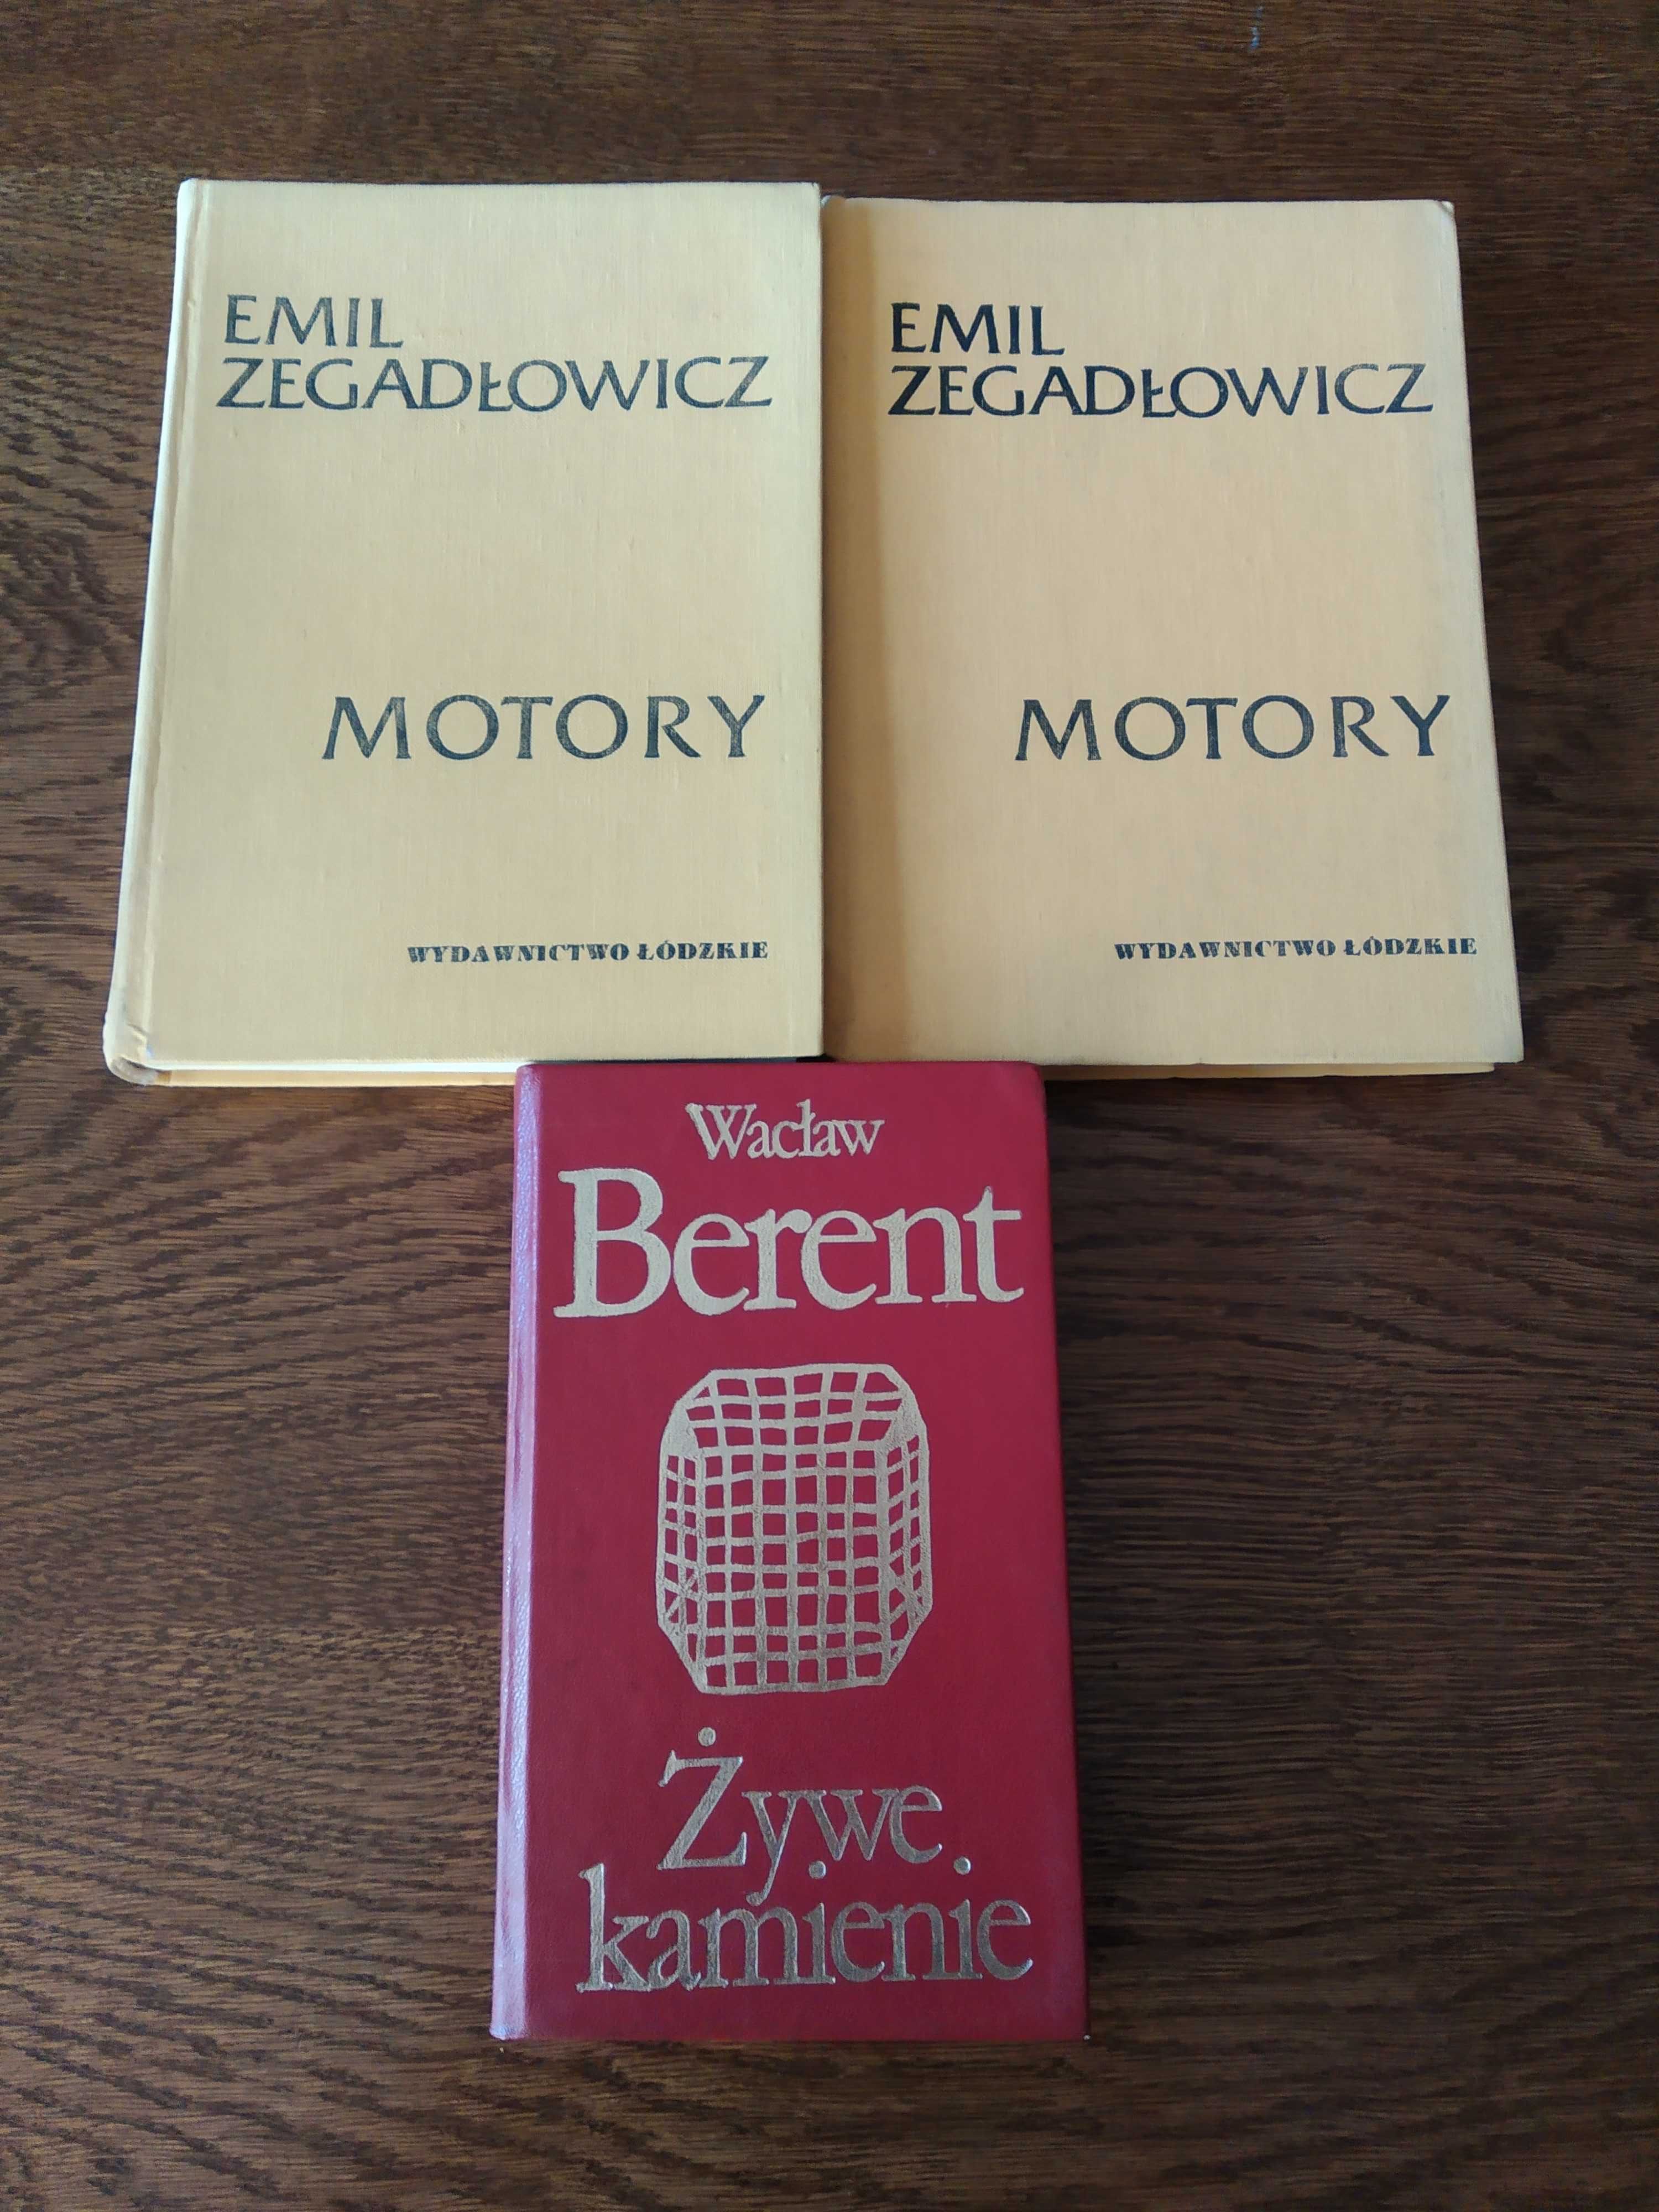 Polska klasyka literatury - Zegadłowicz, Berent